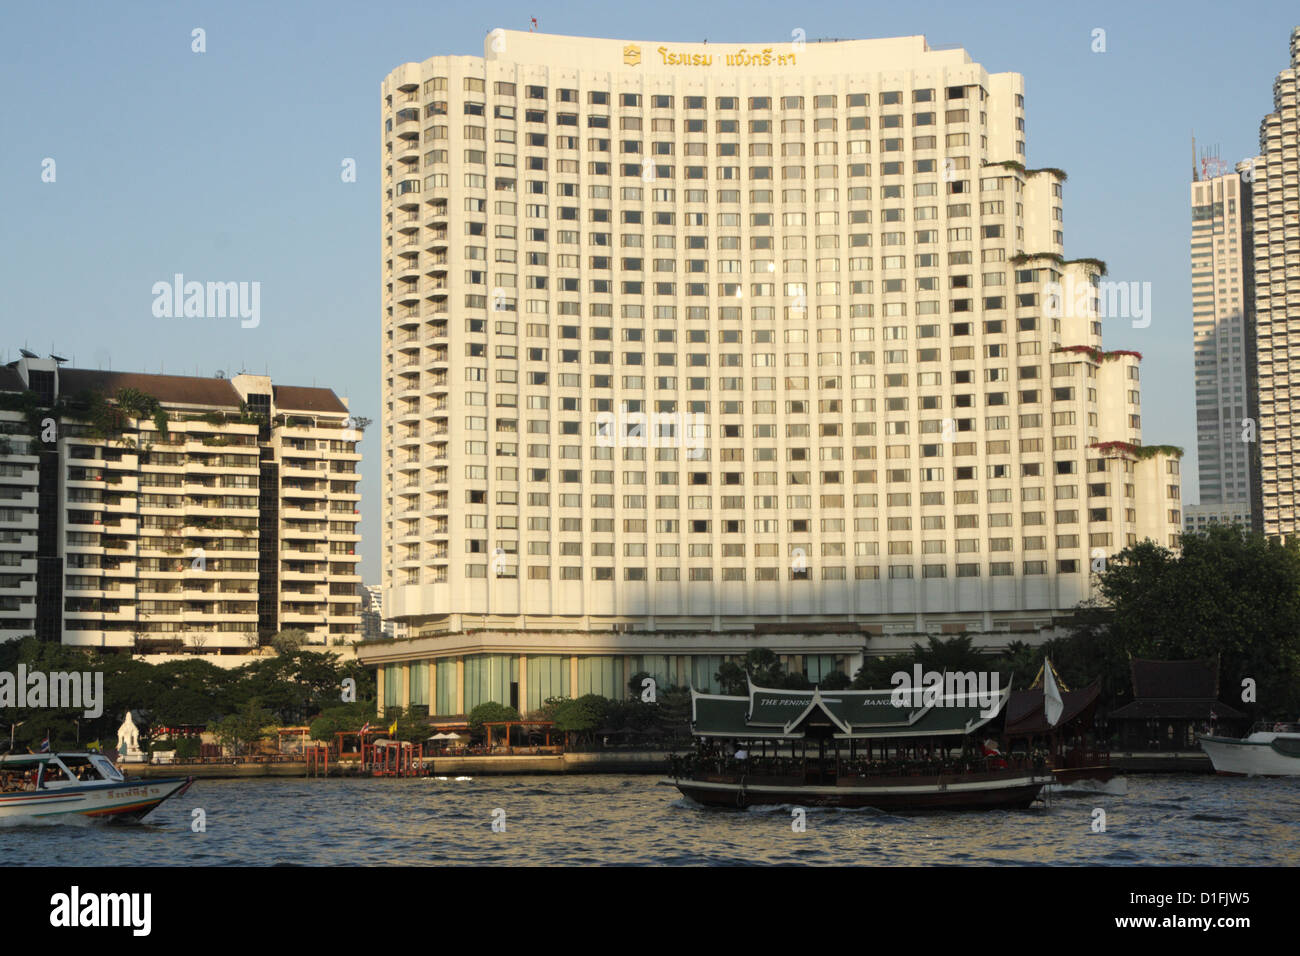 Shangri-La Hotel am Chao Phraya River in Bangkok, Thailand Stockfoto